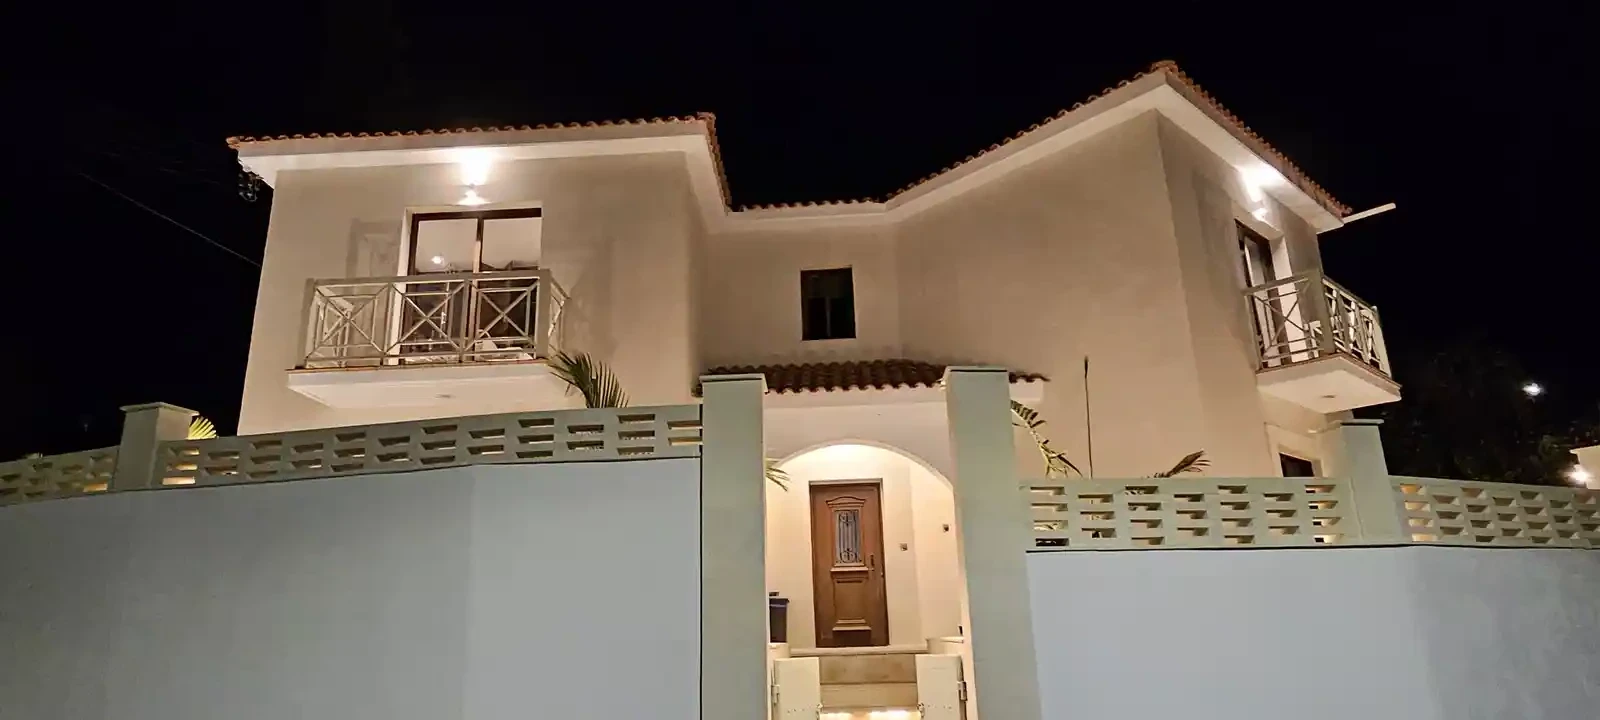 3-bedroom villa fоr sаle €850.000, image 1